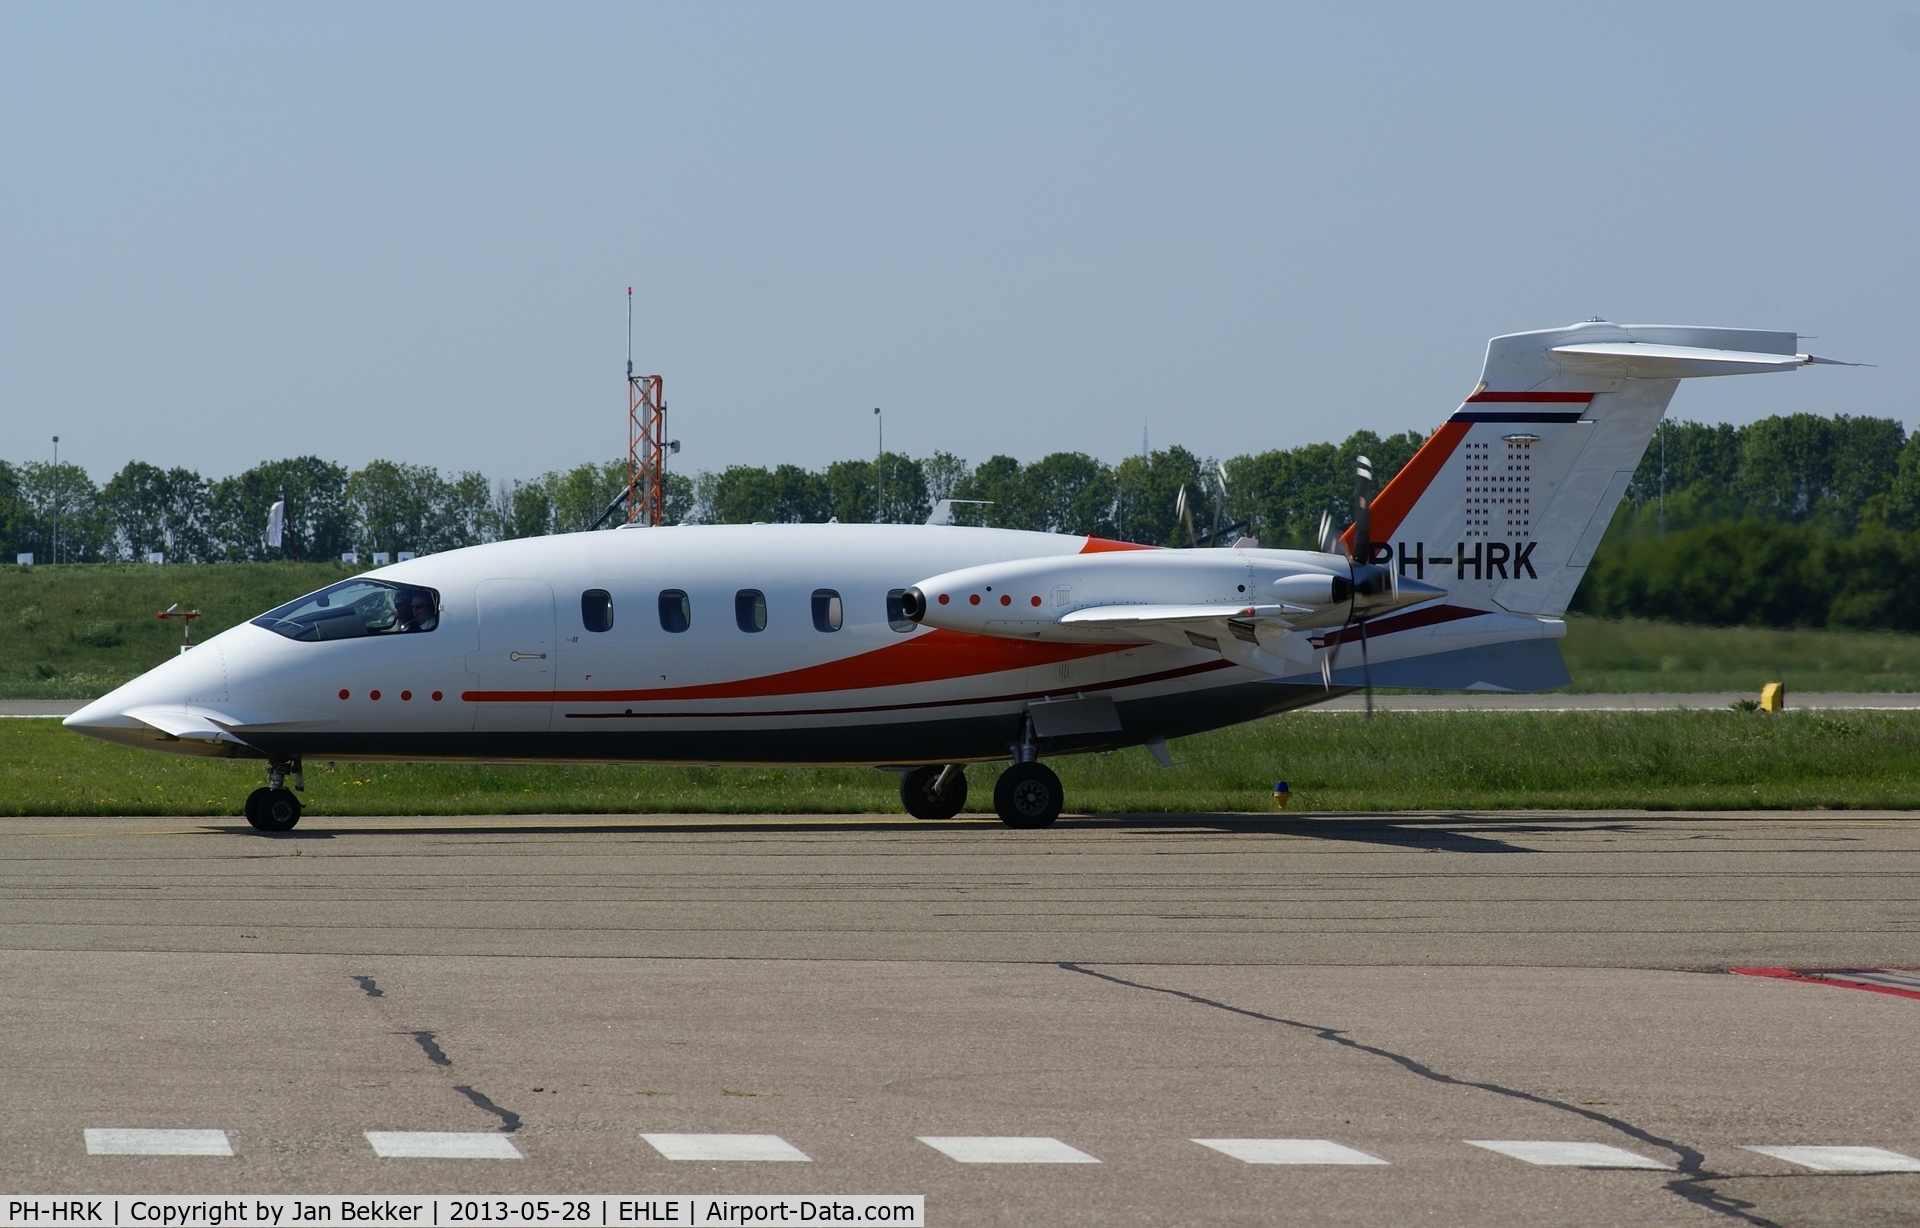 PH-HRK, 2006 Piaggio P-180 Avanti C/N 1120, Just arrived at Lelystad Airport